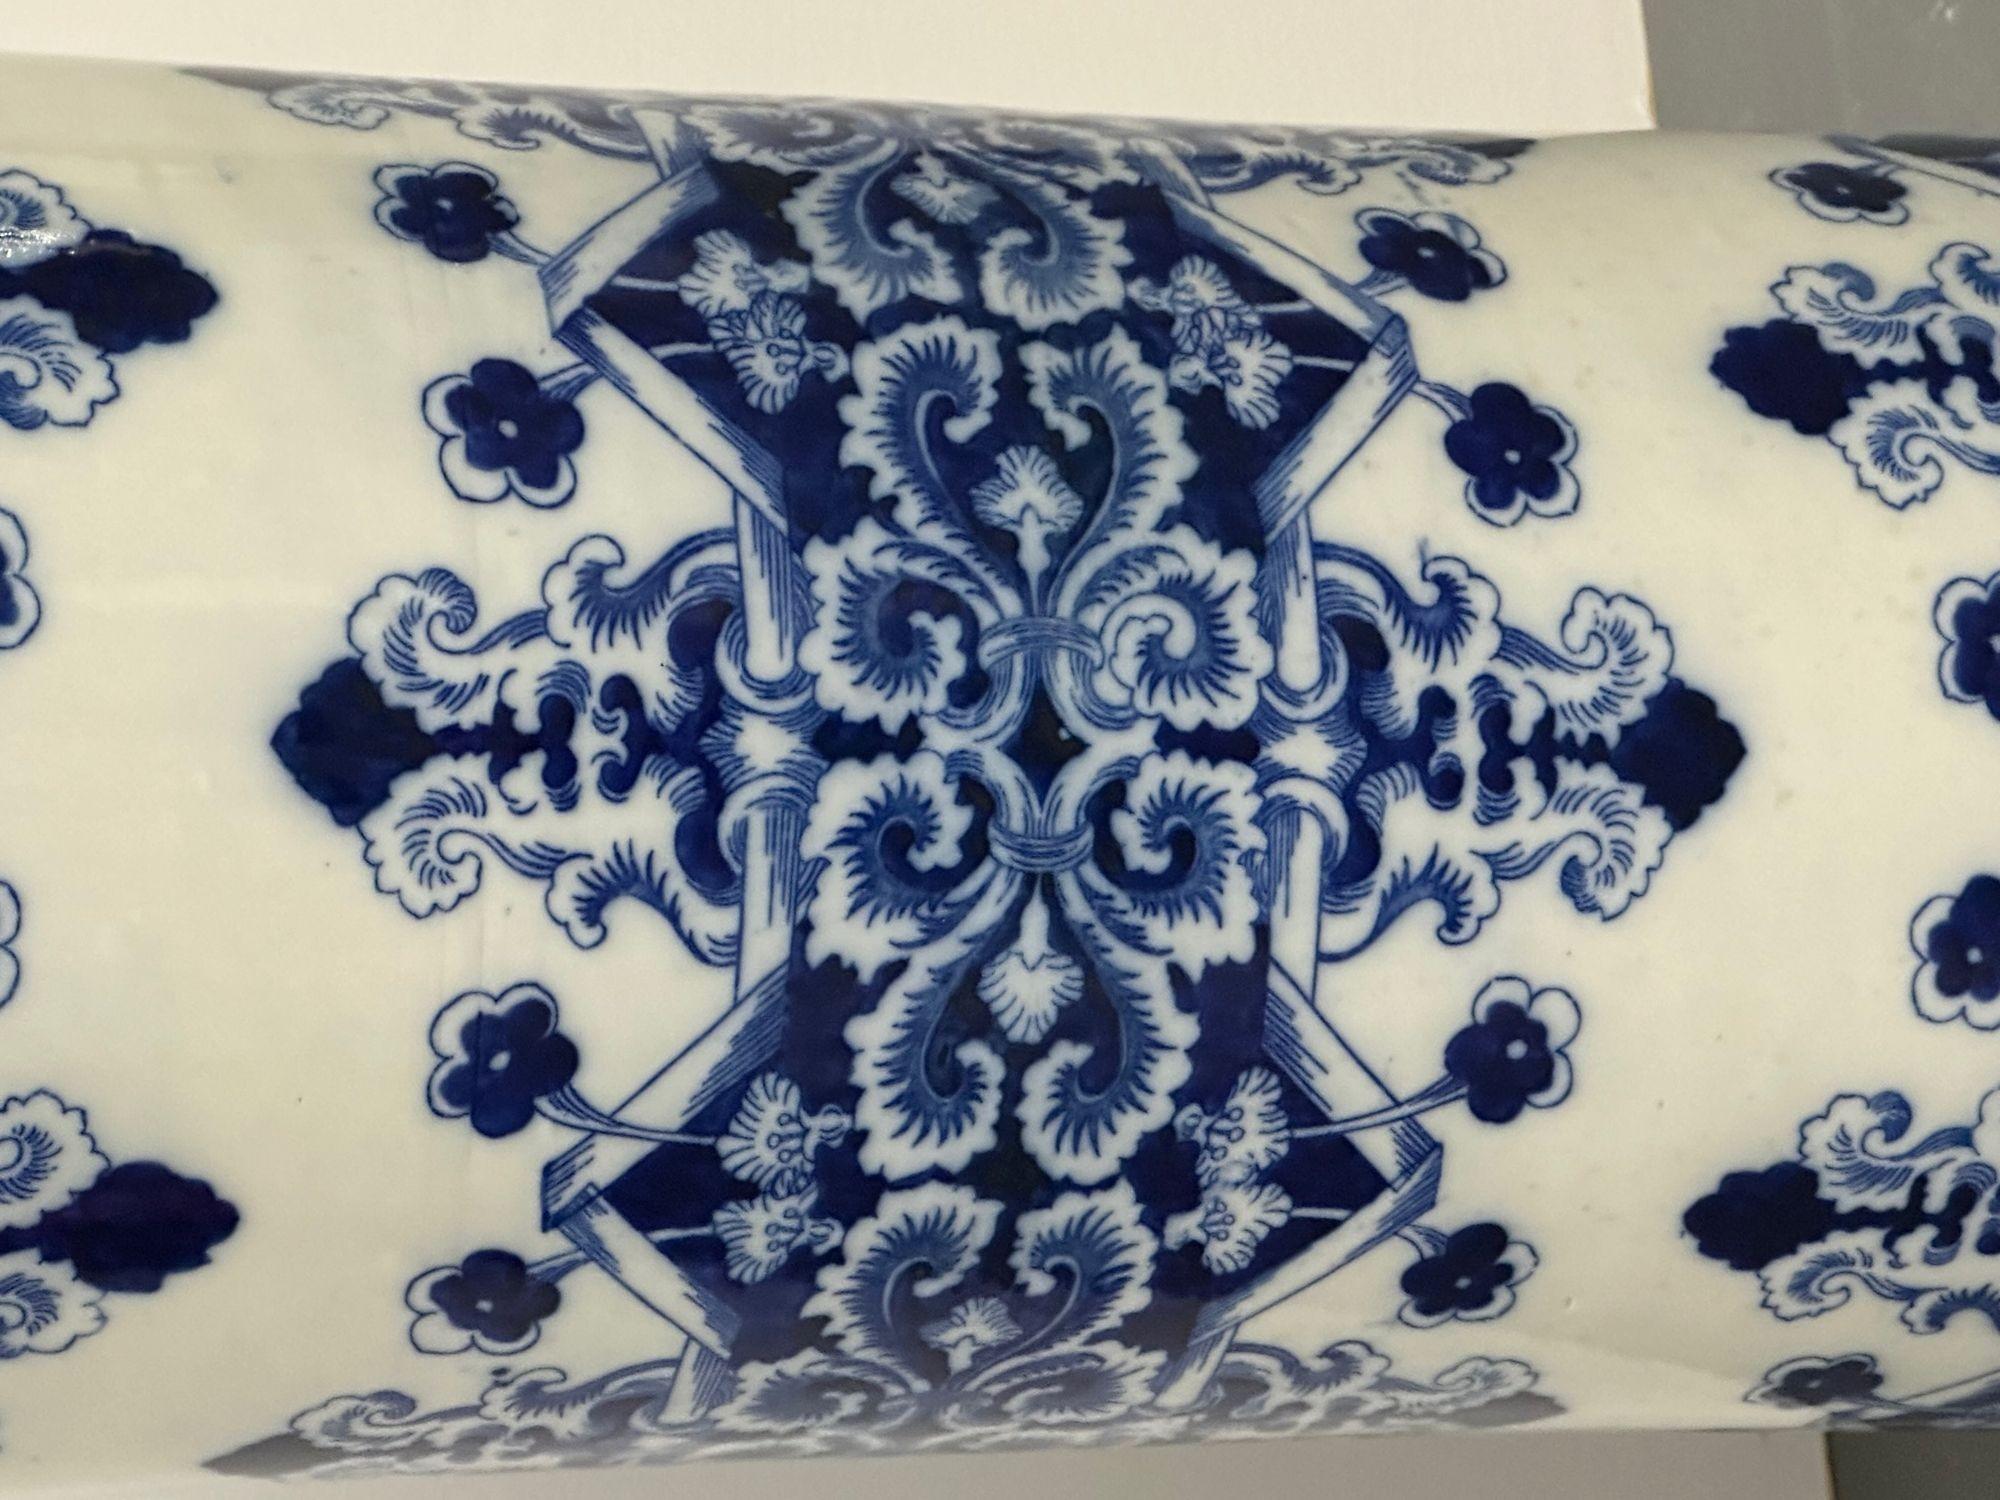 20th Century Oriental Porcelain Flow Blue White Umbrella Stand, Large Vase, Floral Decorated For Sale